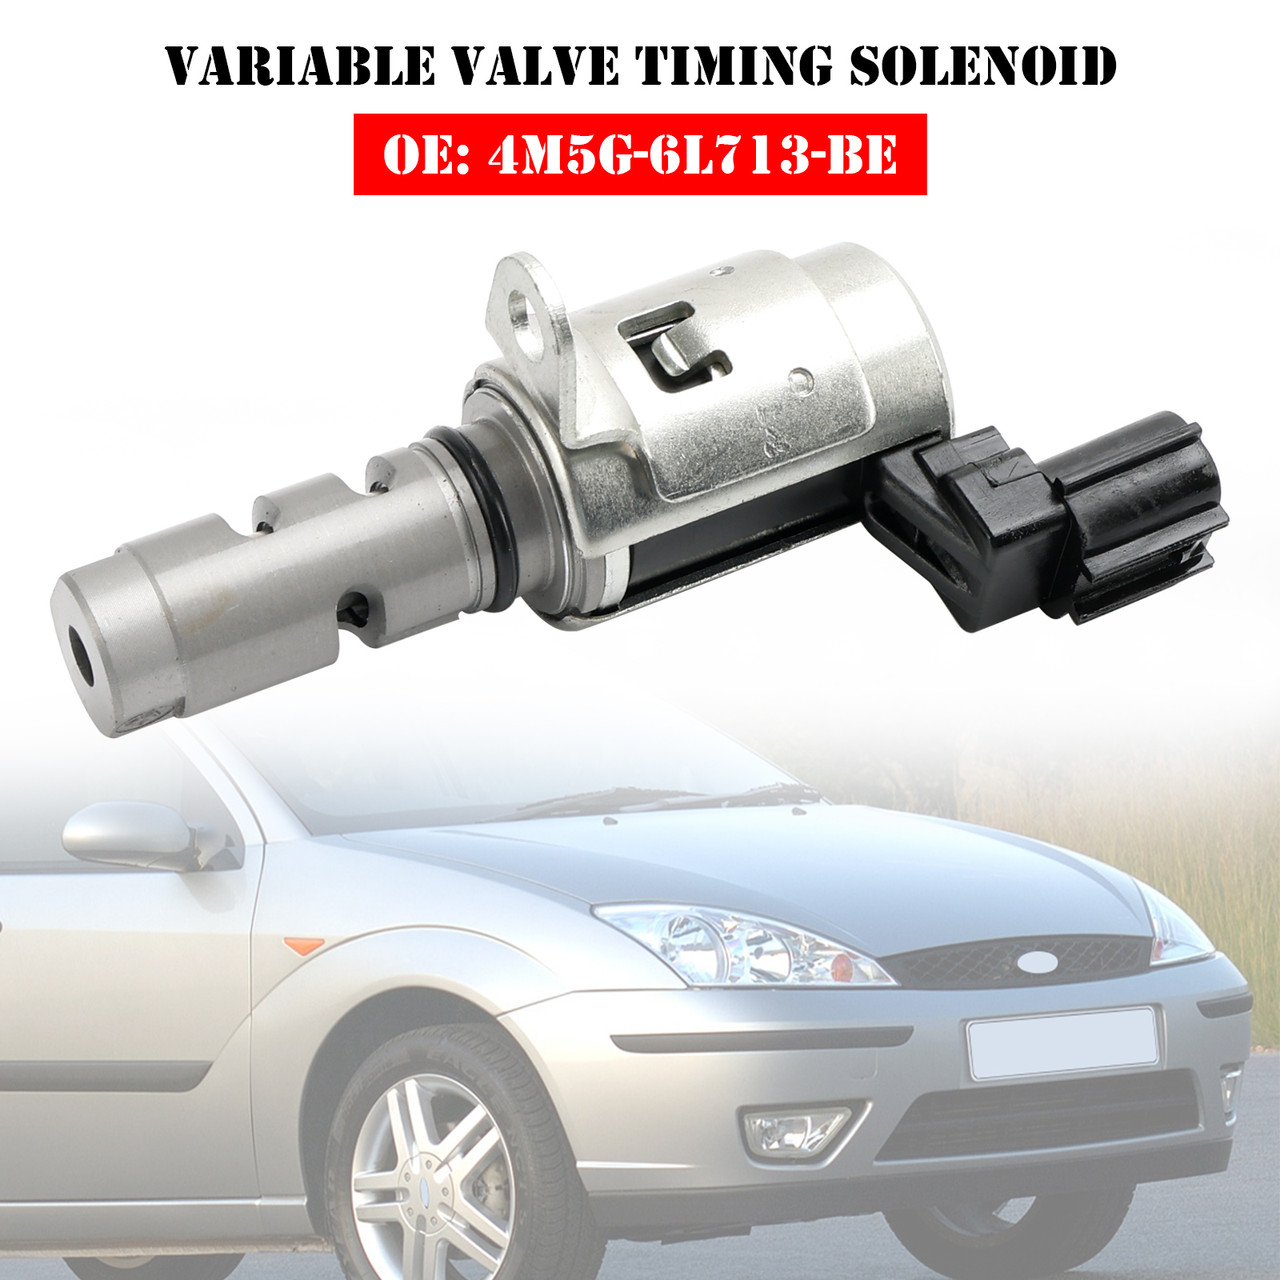 Variable Valve Timing VVT Solenoid for Ford Focus 1.6i 4M5G-6L713-BE